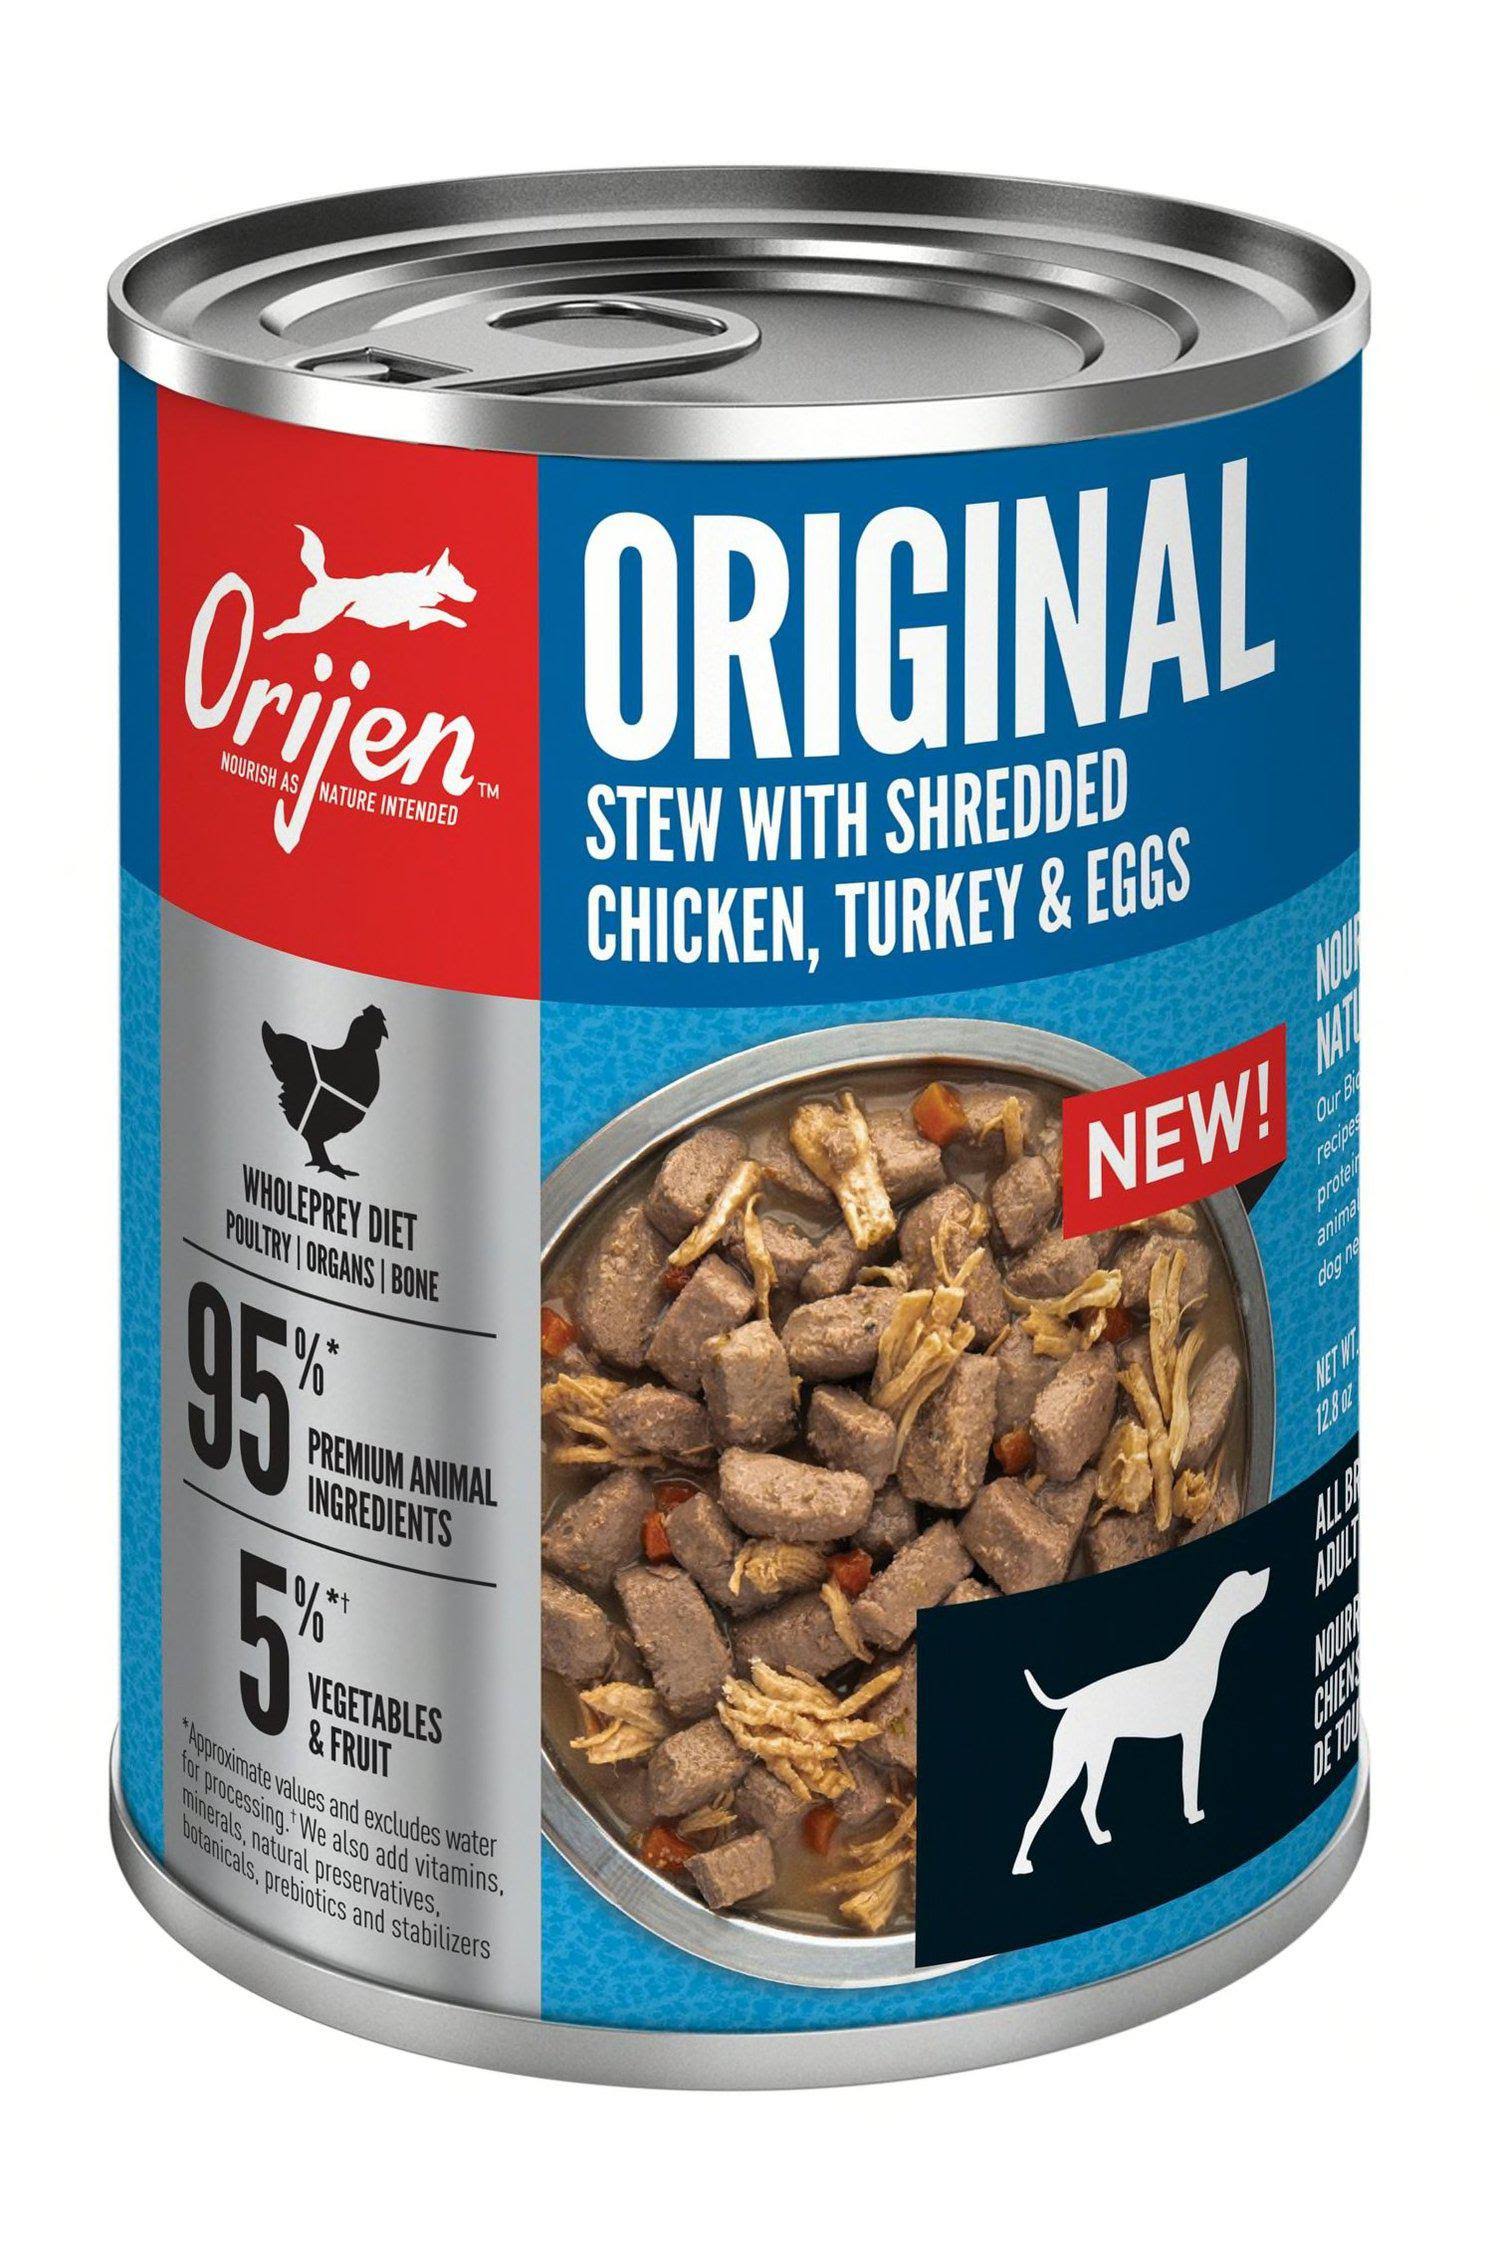 Orijen Original Stew Canned Dog Food